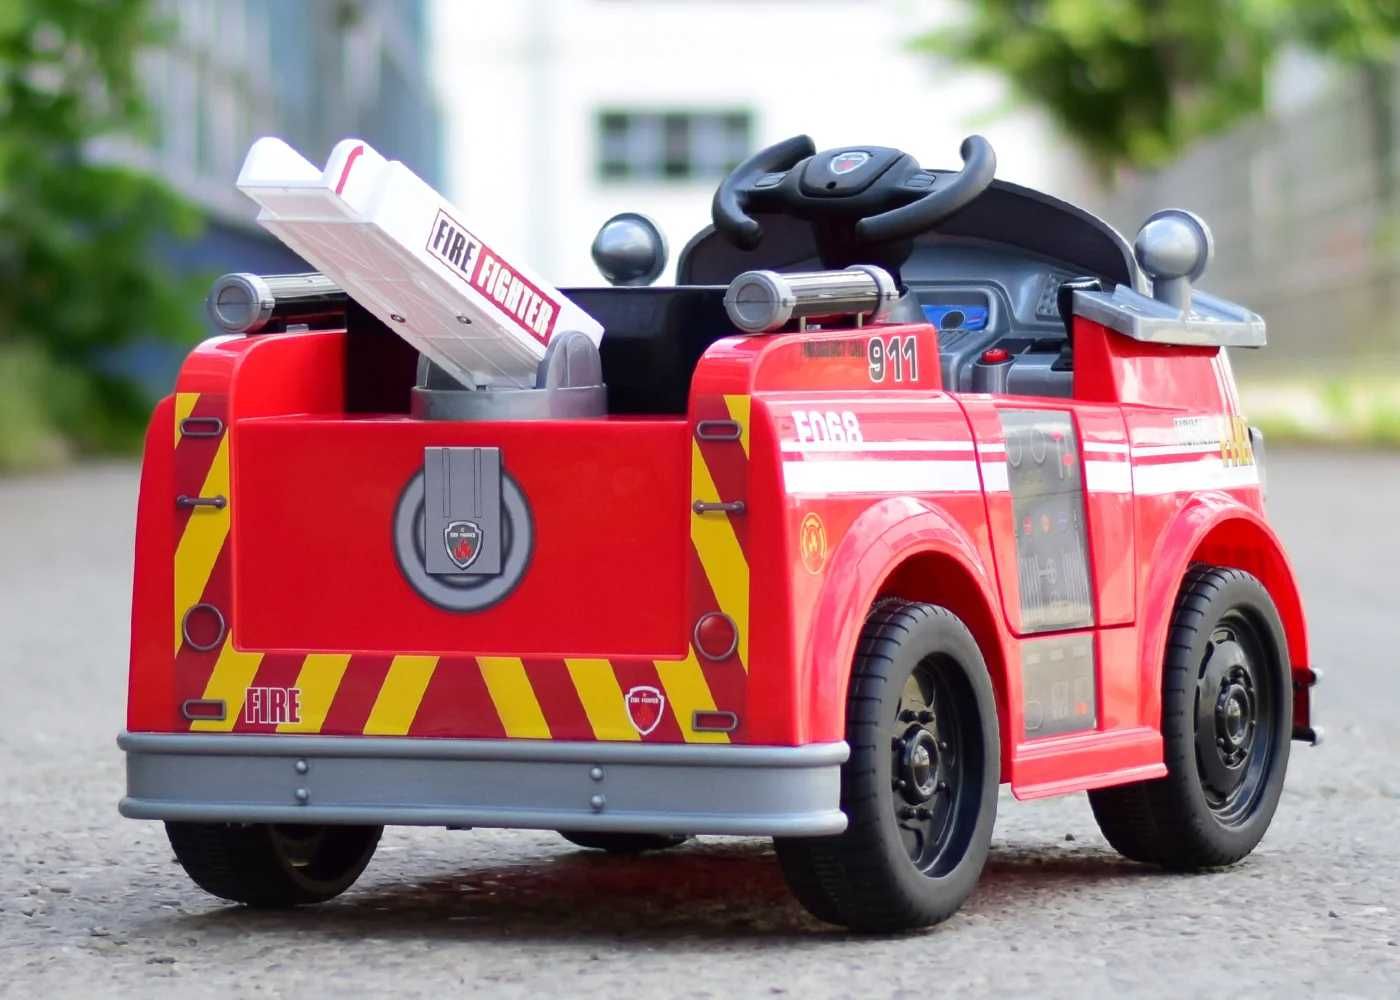 Masinuta electrica copii 2-5 ani de pompieri Patrol BJJ306 70W #Rosu